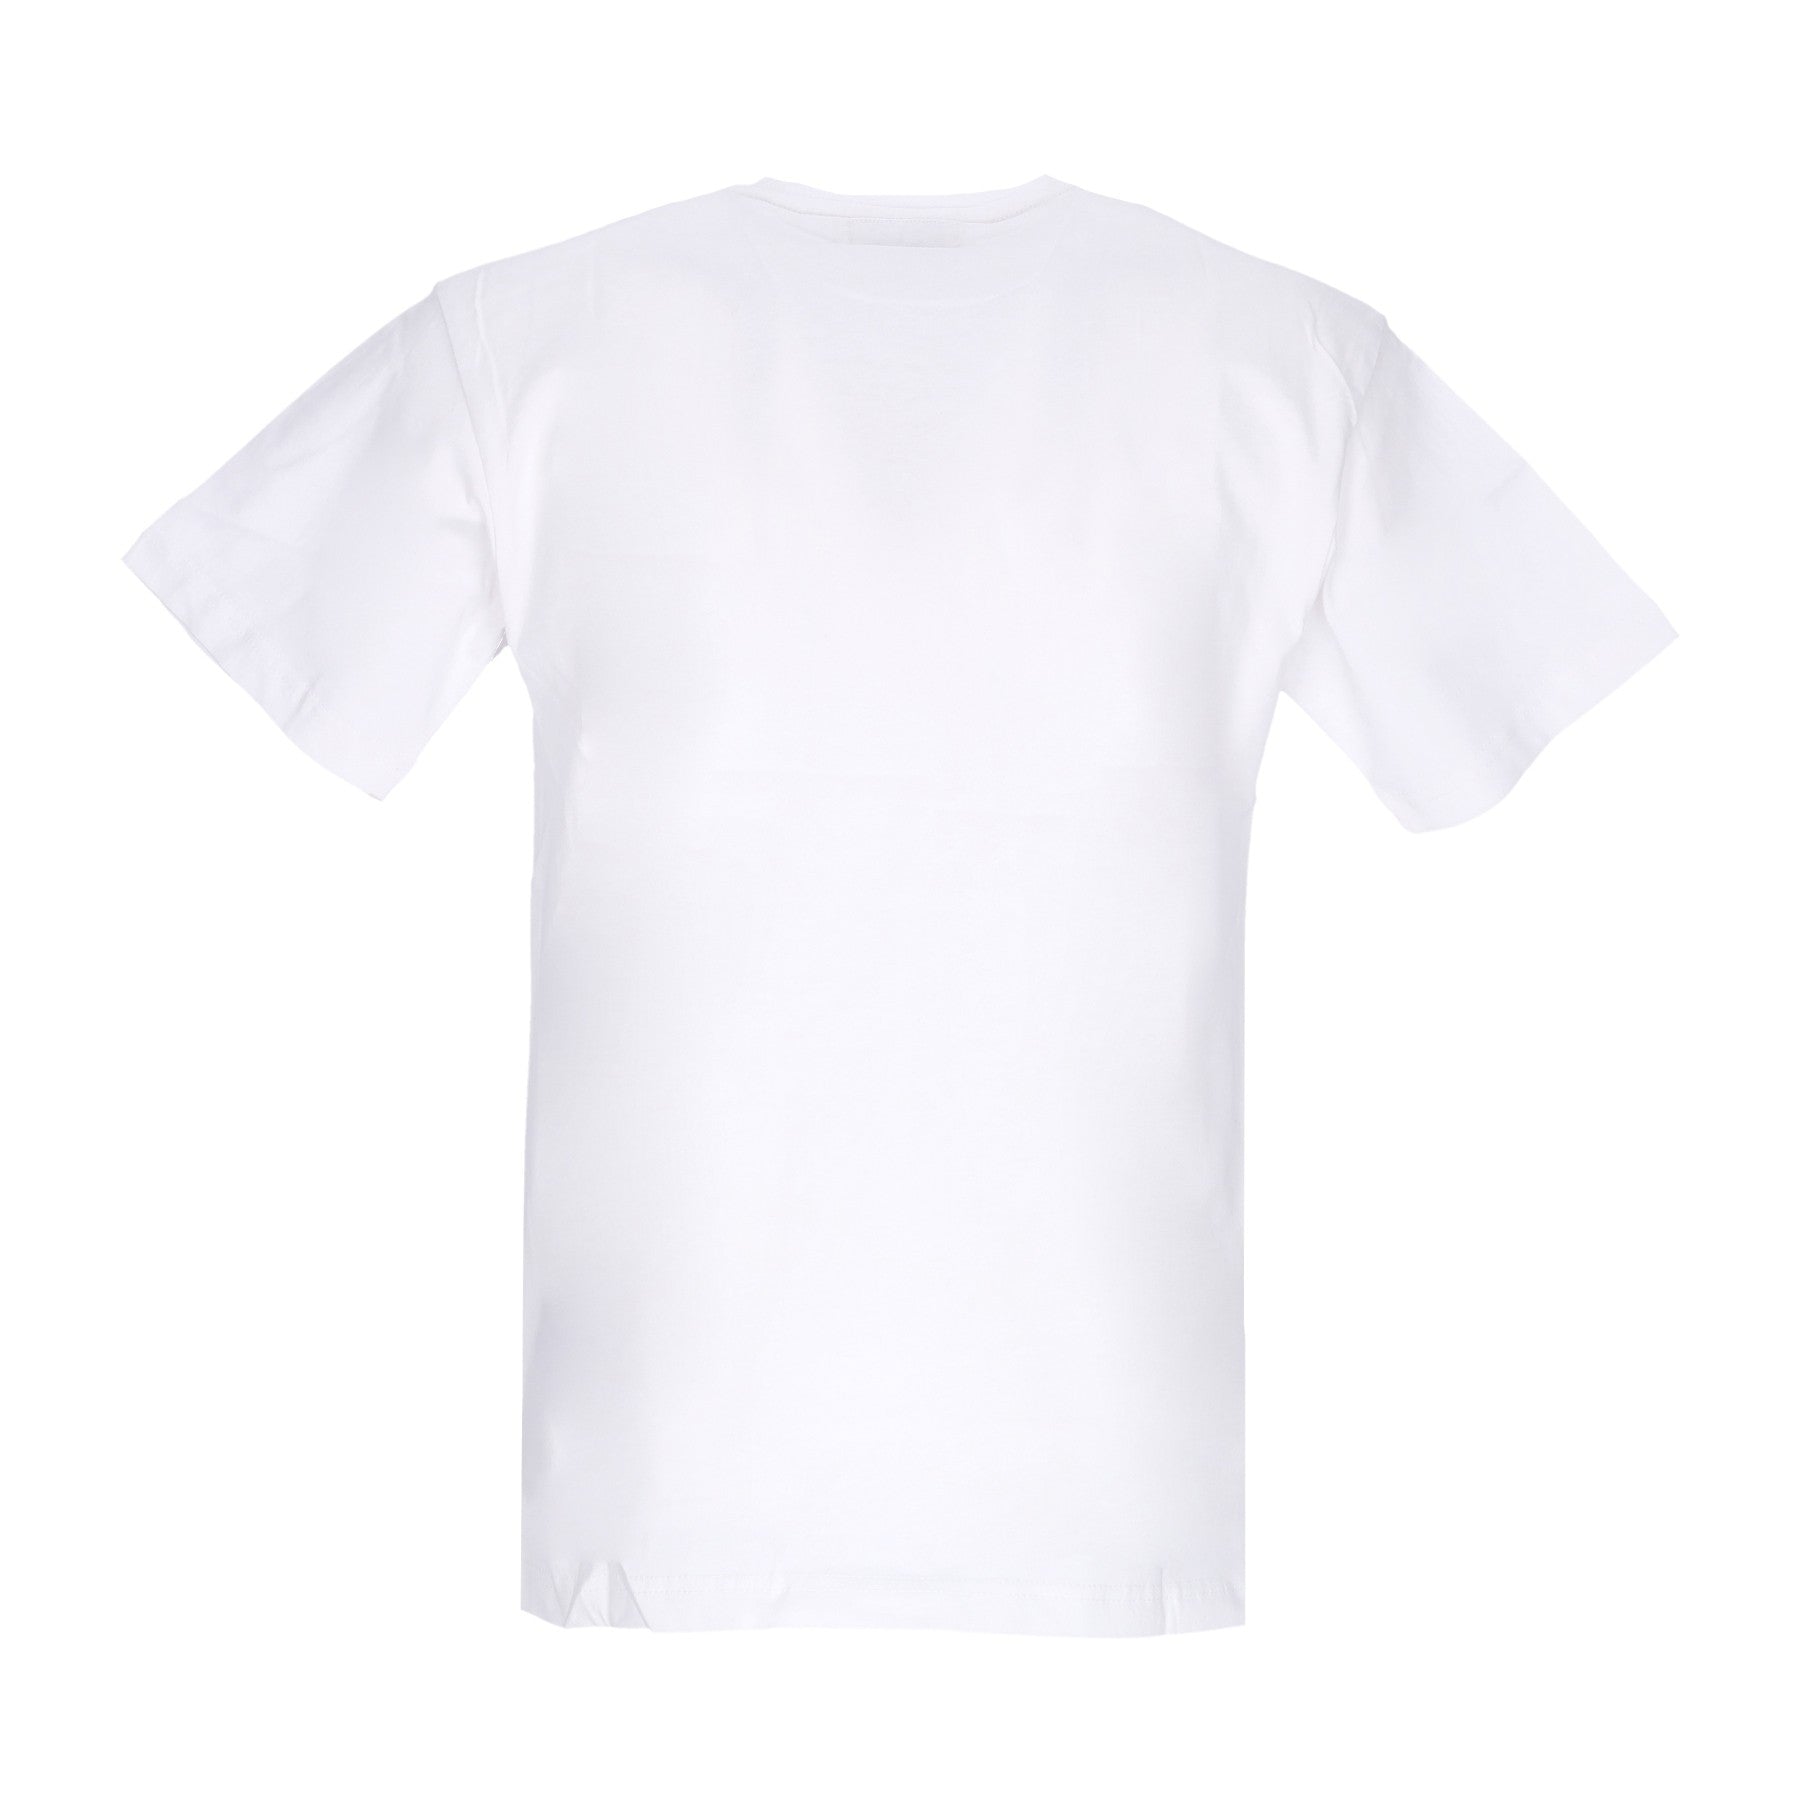 Iron Market Tee X Smiley Weißes Herren-T-Shirt